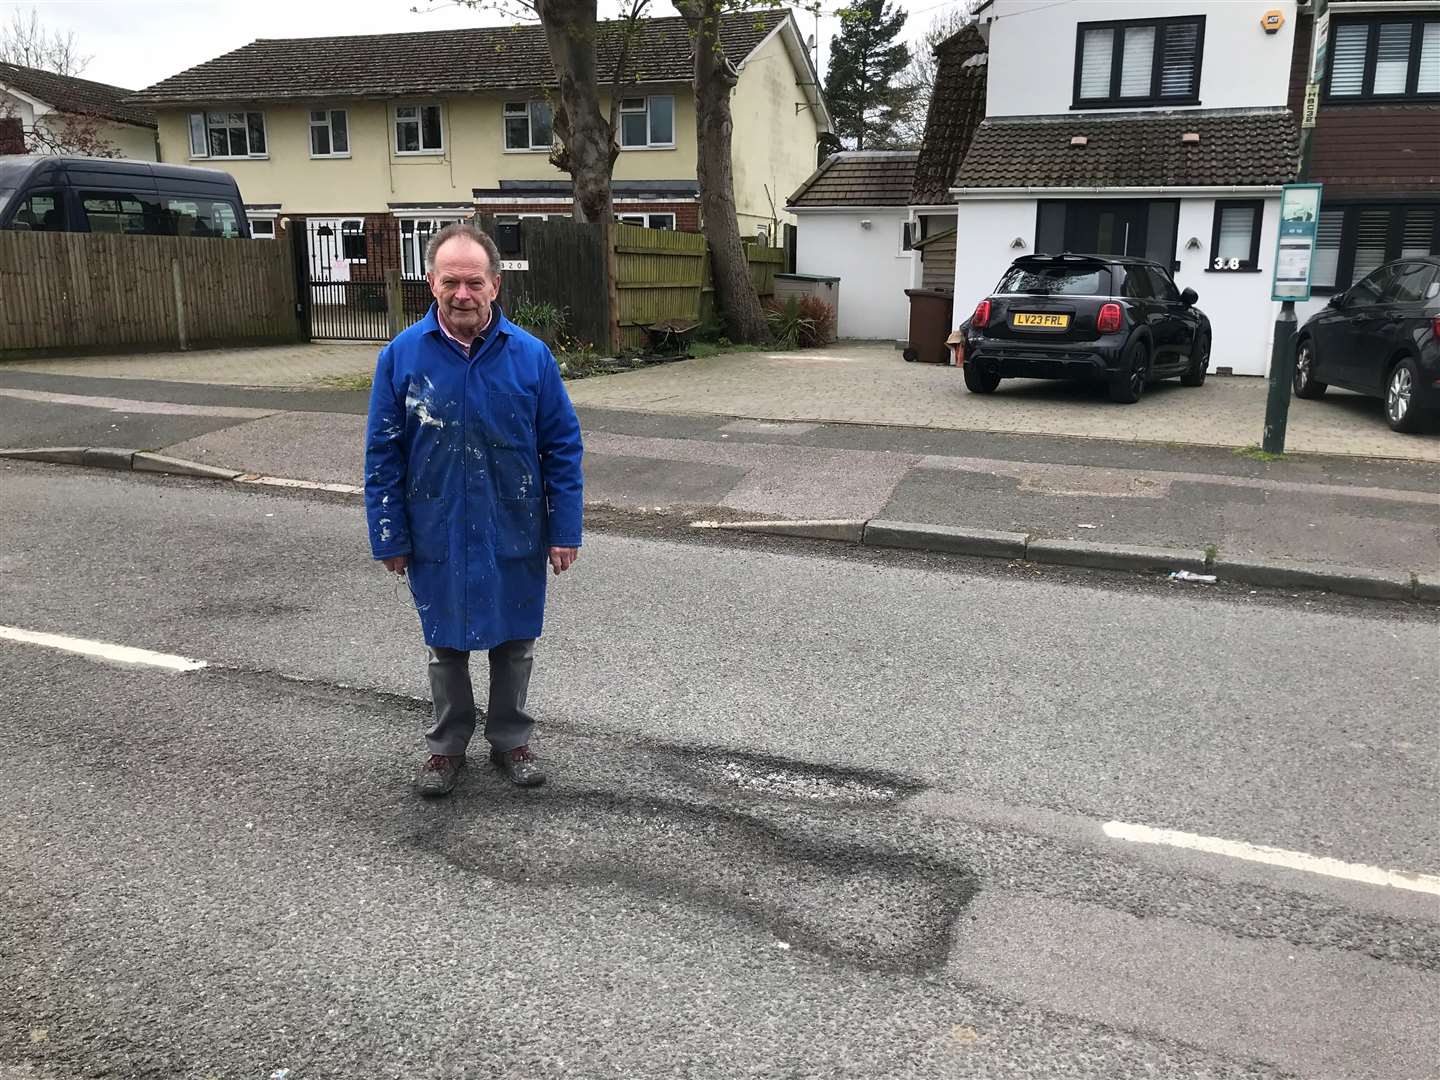 Hempstead Road resident Michael Kearsey-Lawson is surprised the street hasn't been earmarked for repairs